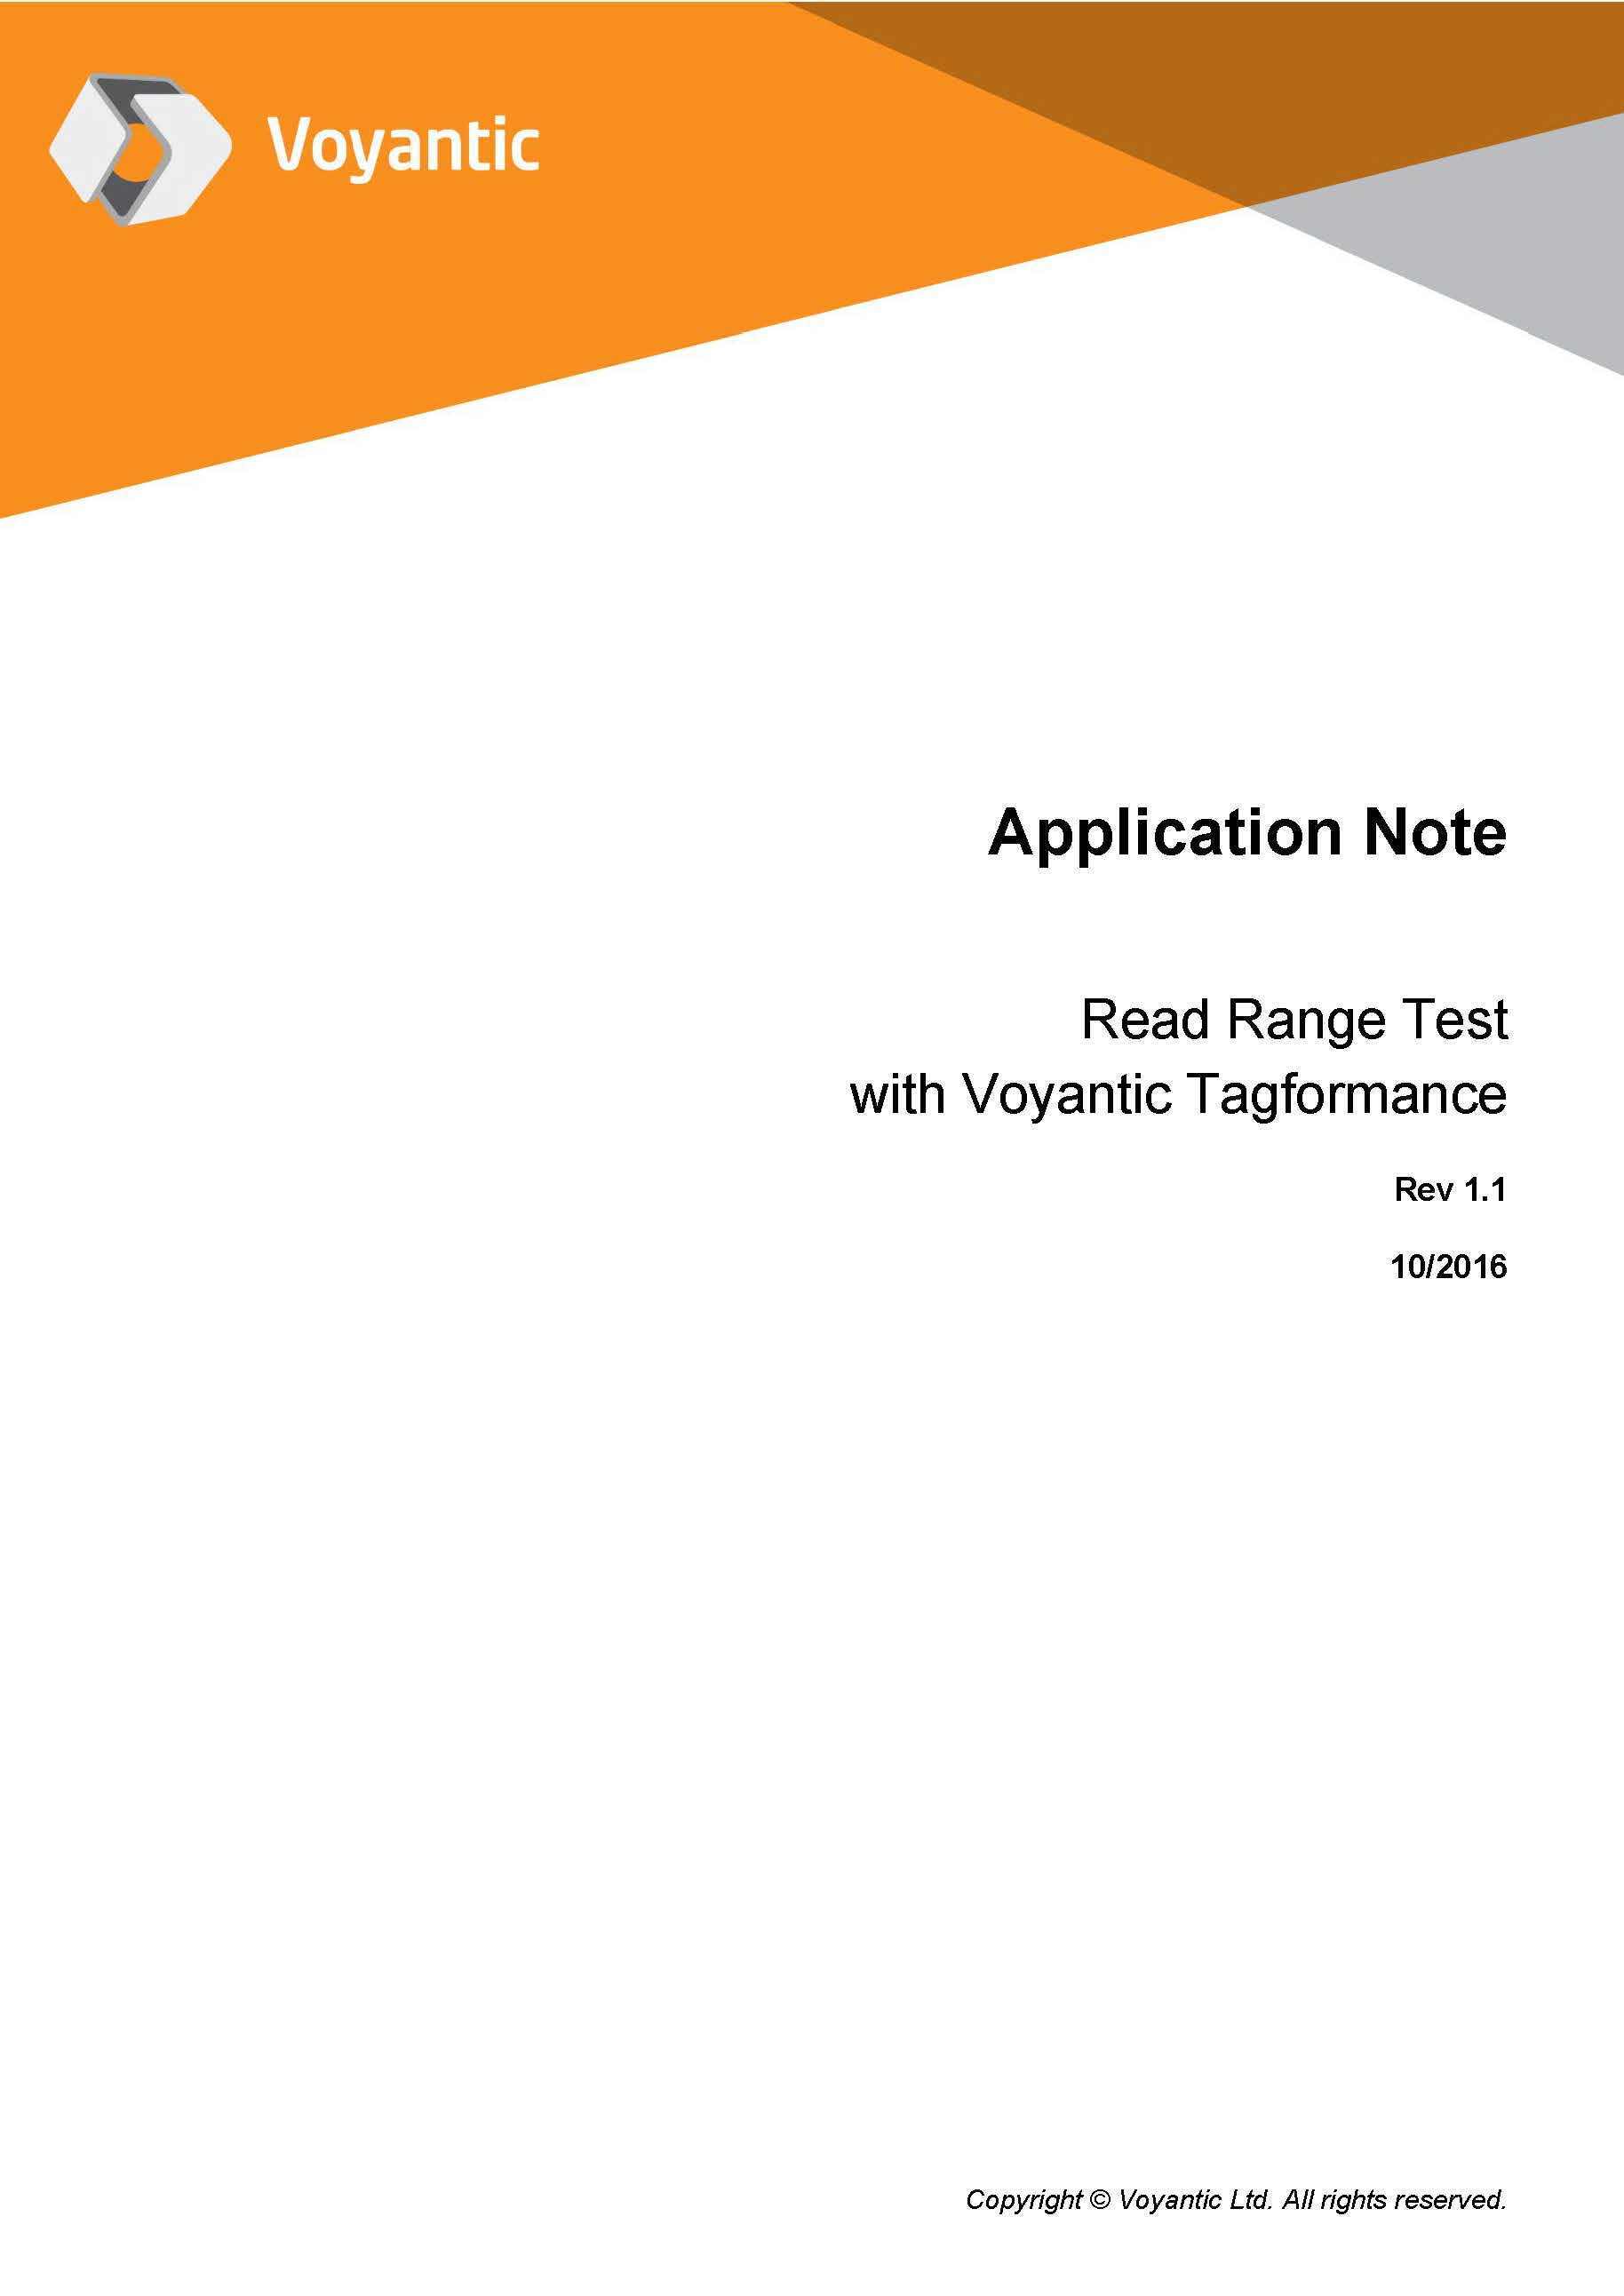 AppNote_Read_Range_Test_Voyantic_Tagformance_2016-10_Page_1